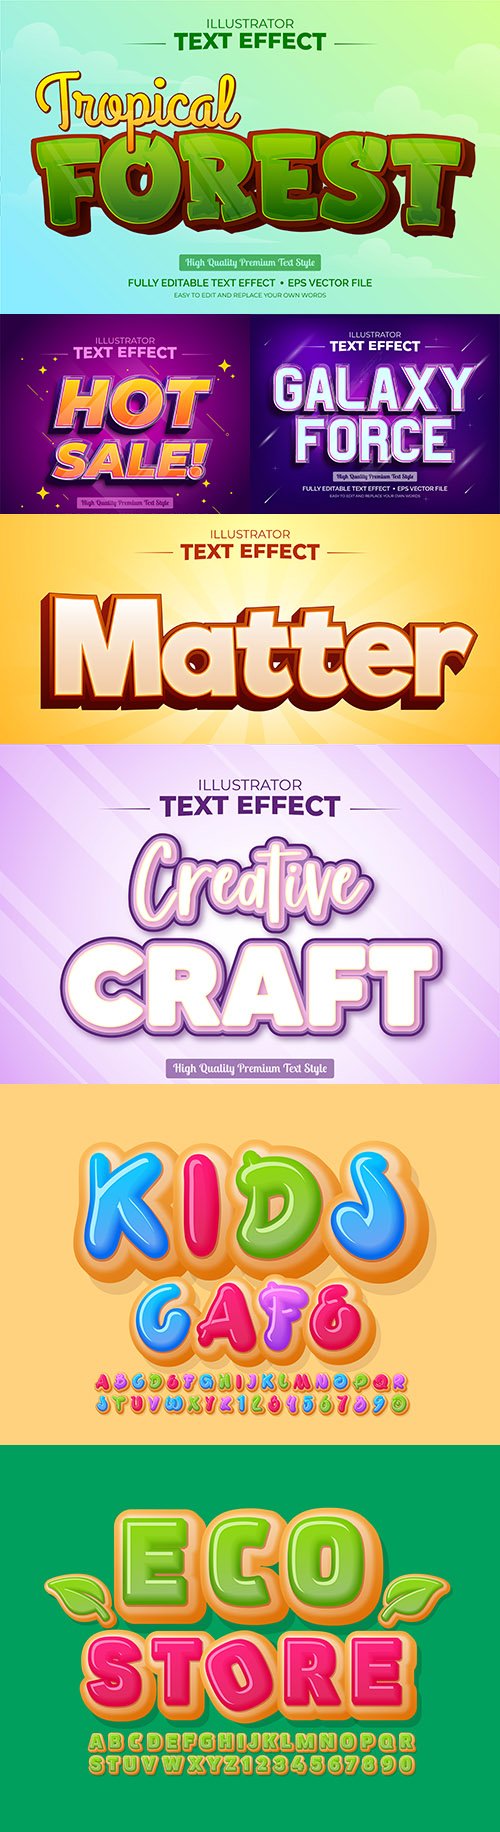 Editable font effect text collection illustration design 143